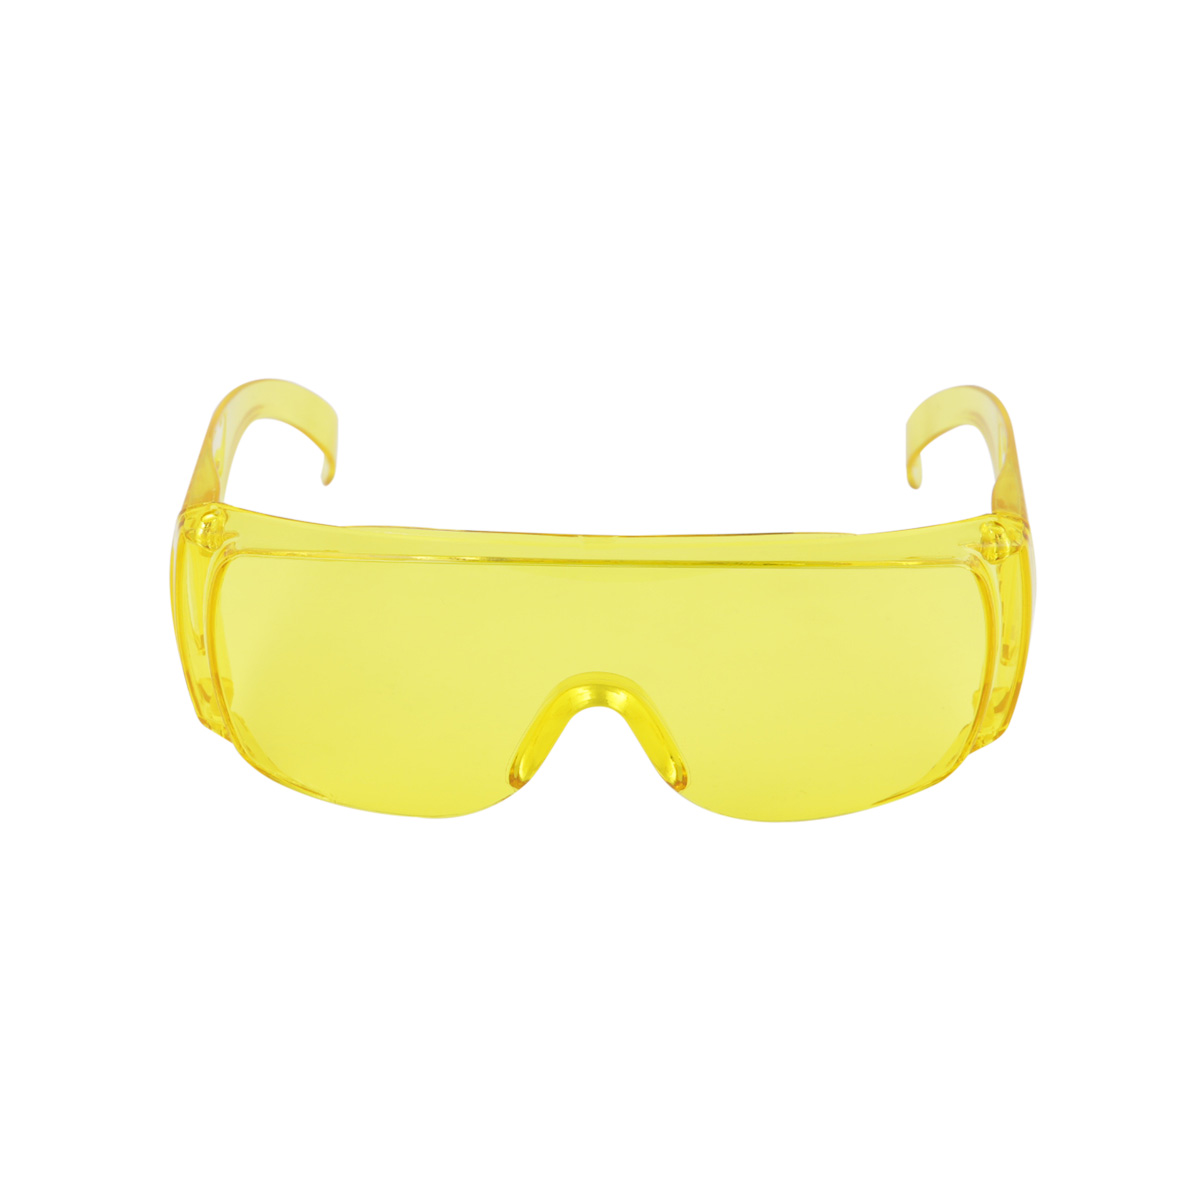 Zaštitne naočare Wide žute 